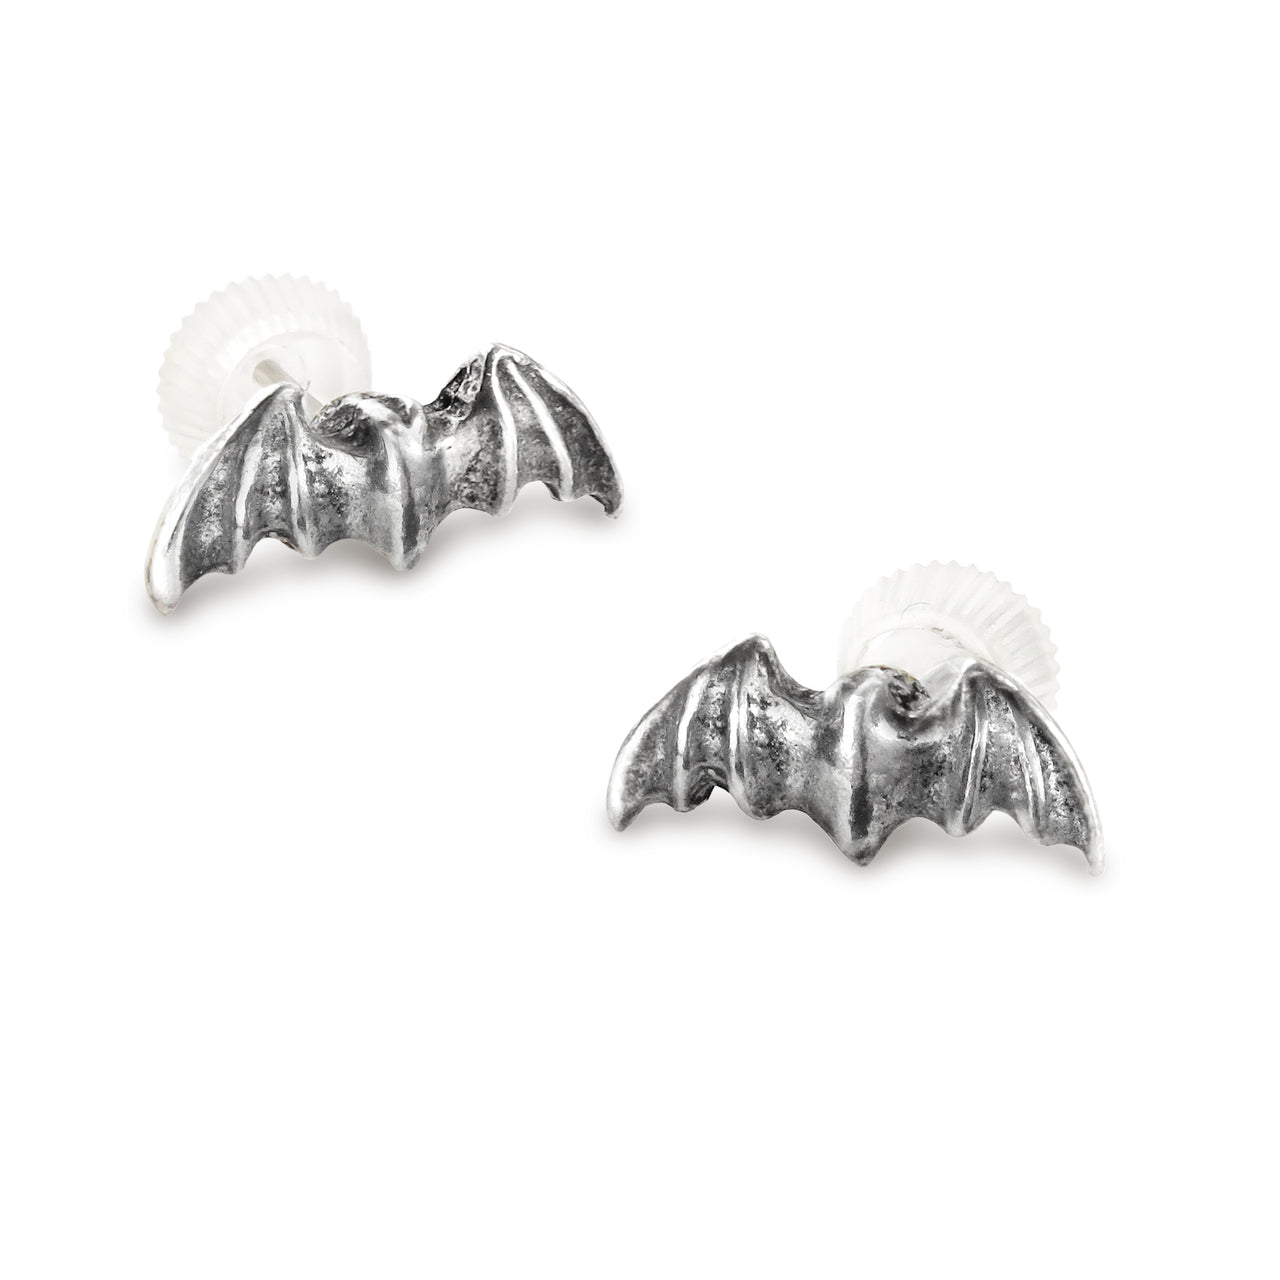 Bat Stud Earrings by Alchemy Gothic